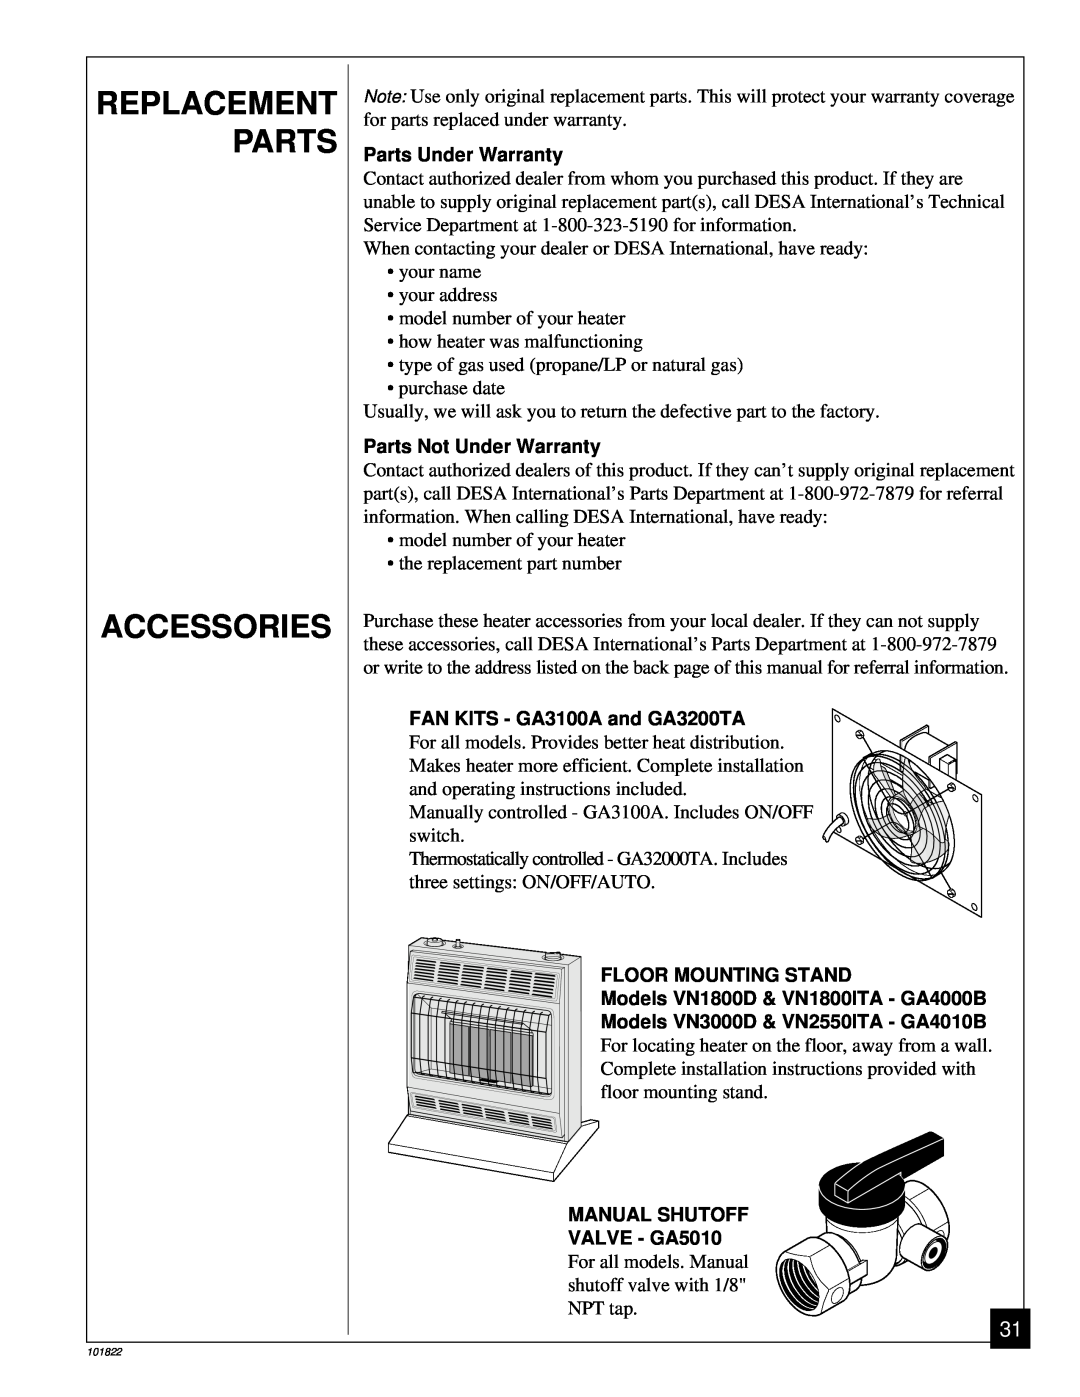 Desa VN3000D Replacement, Accessories, Parts Under Warranty, Parts Not Under Warranty, FAN KITS - GA3100A and GA3200TA 